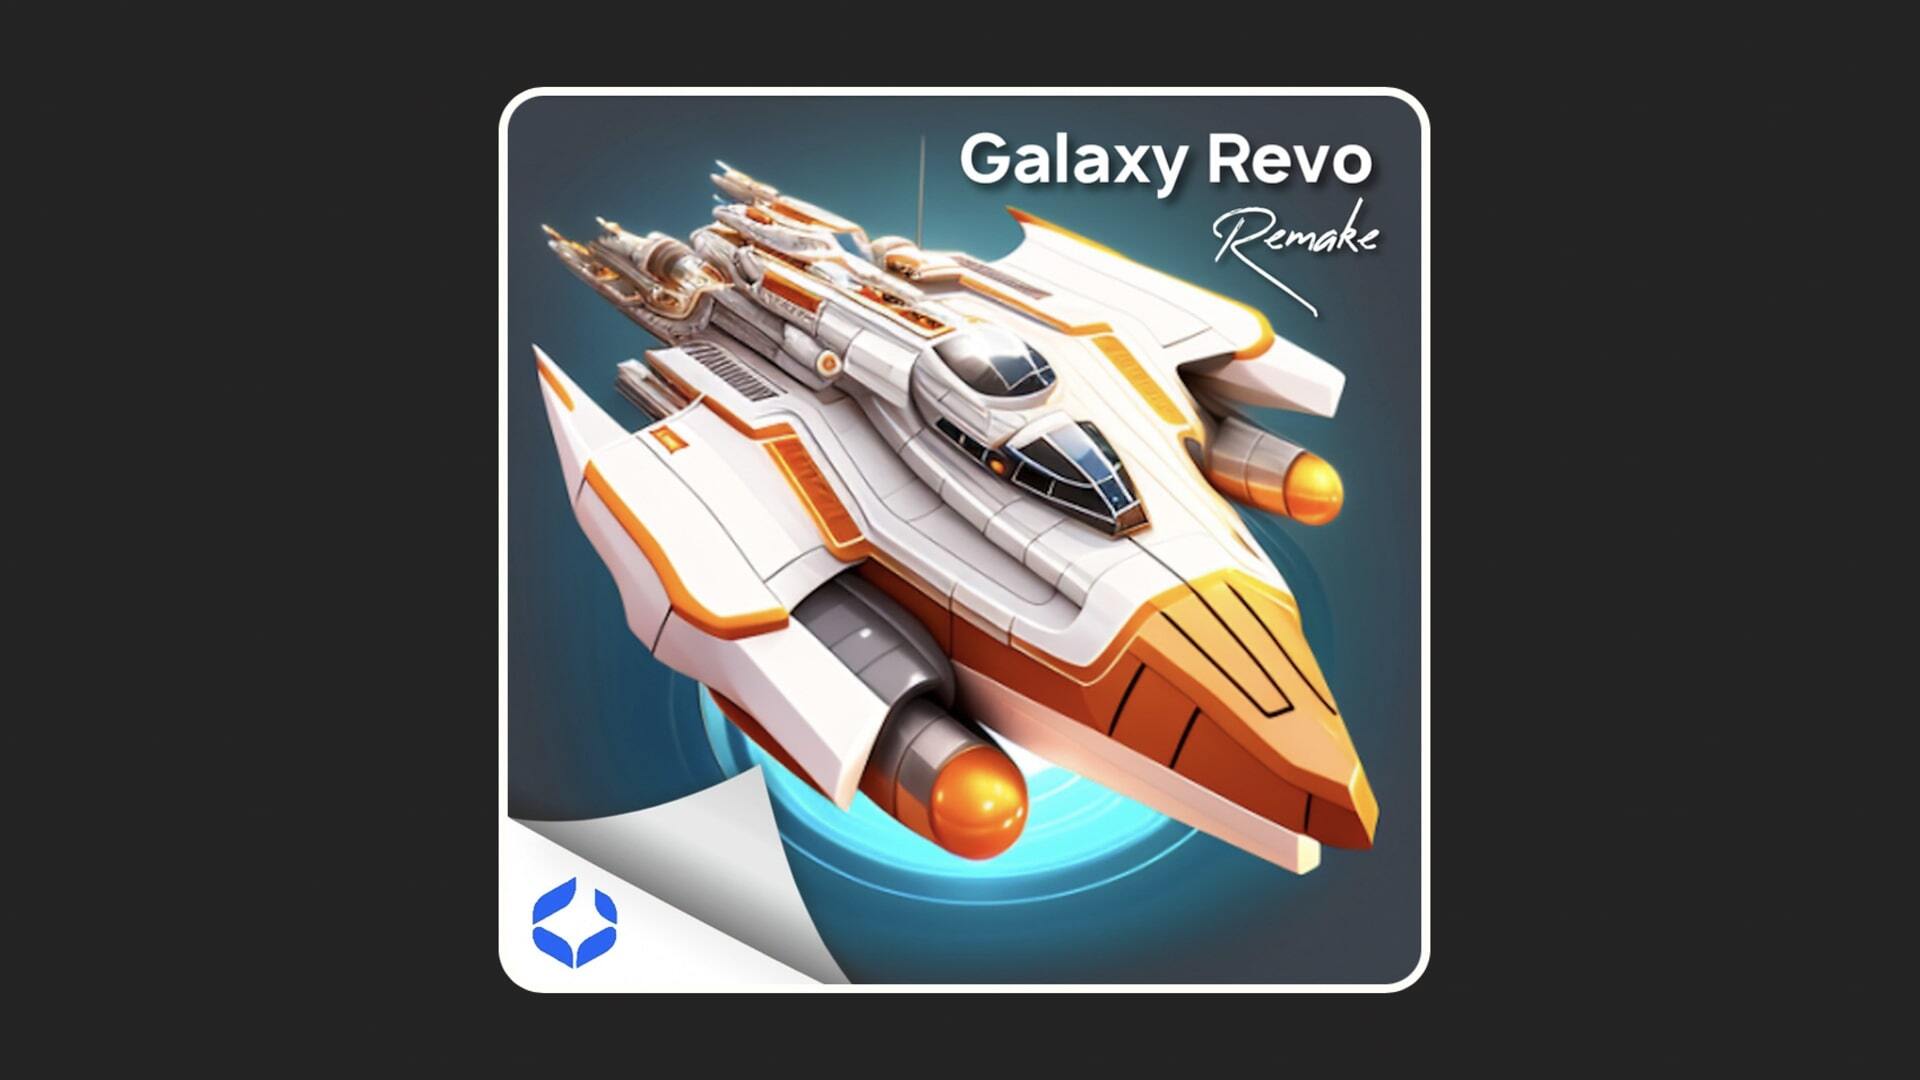 Galaxy Revo: Remake